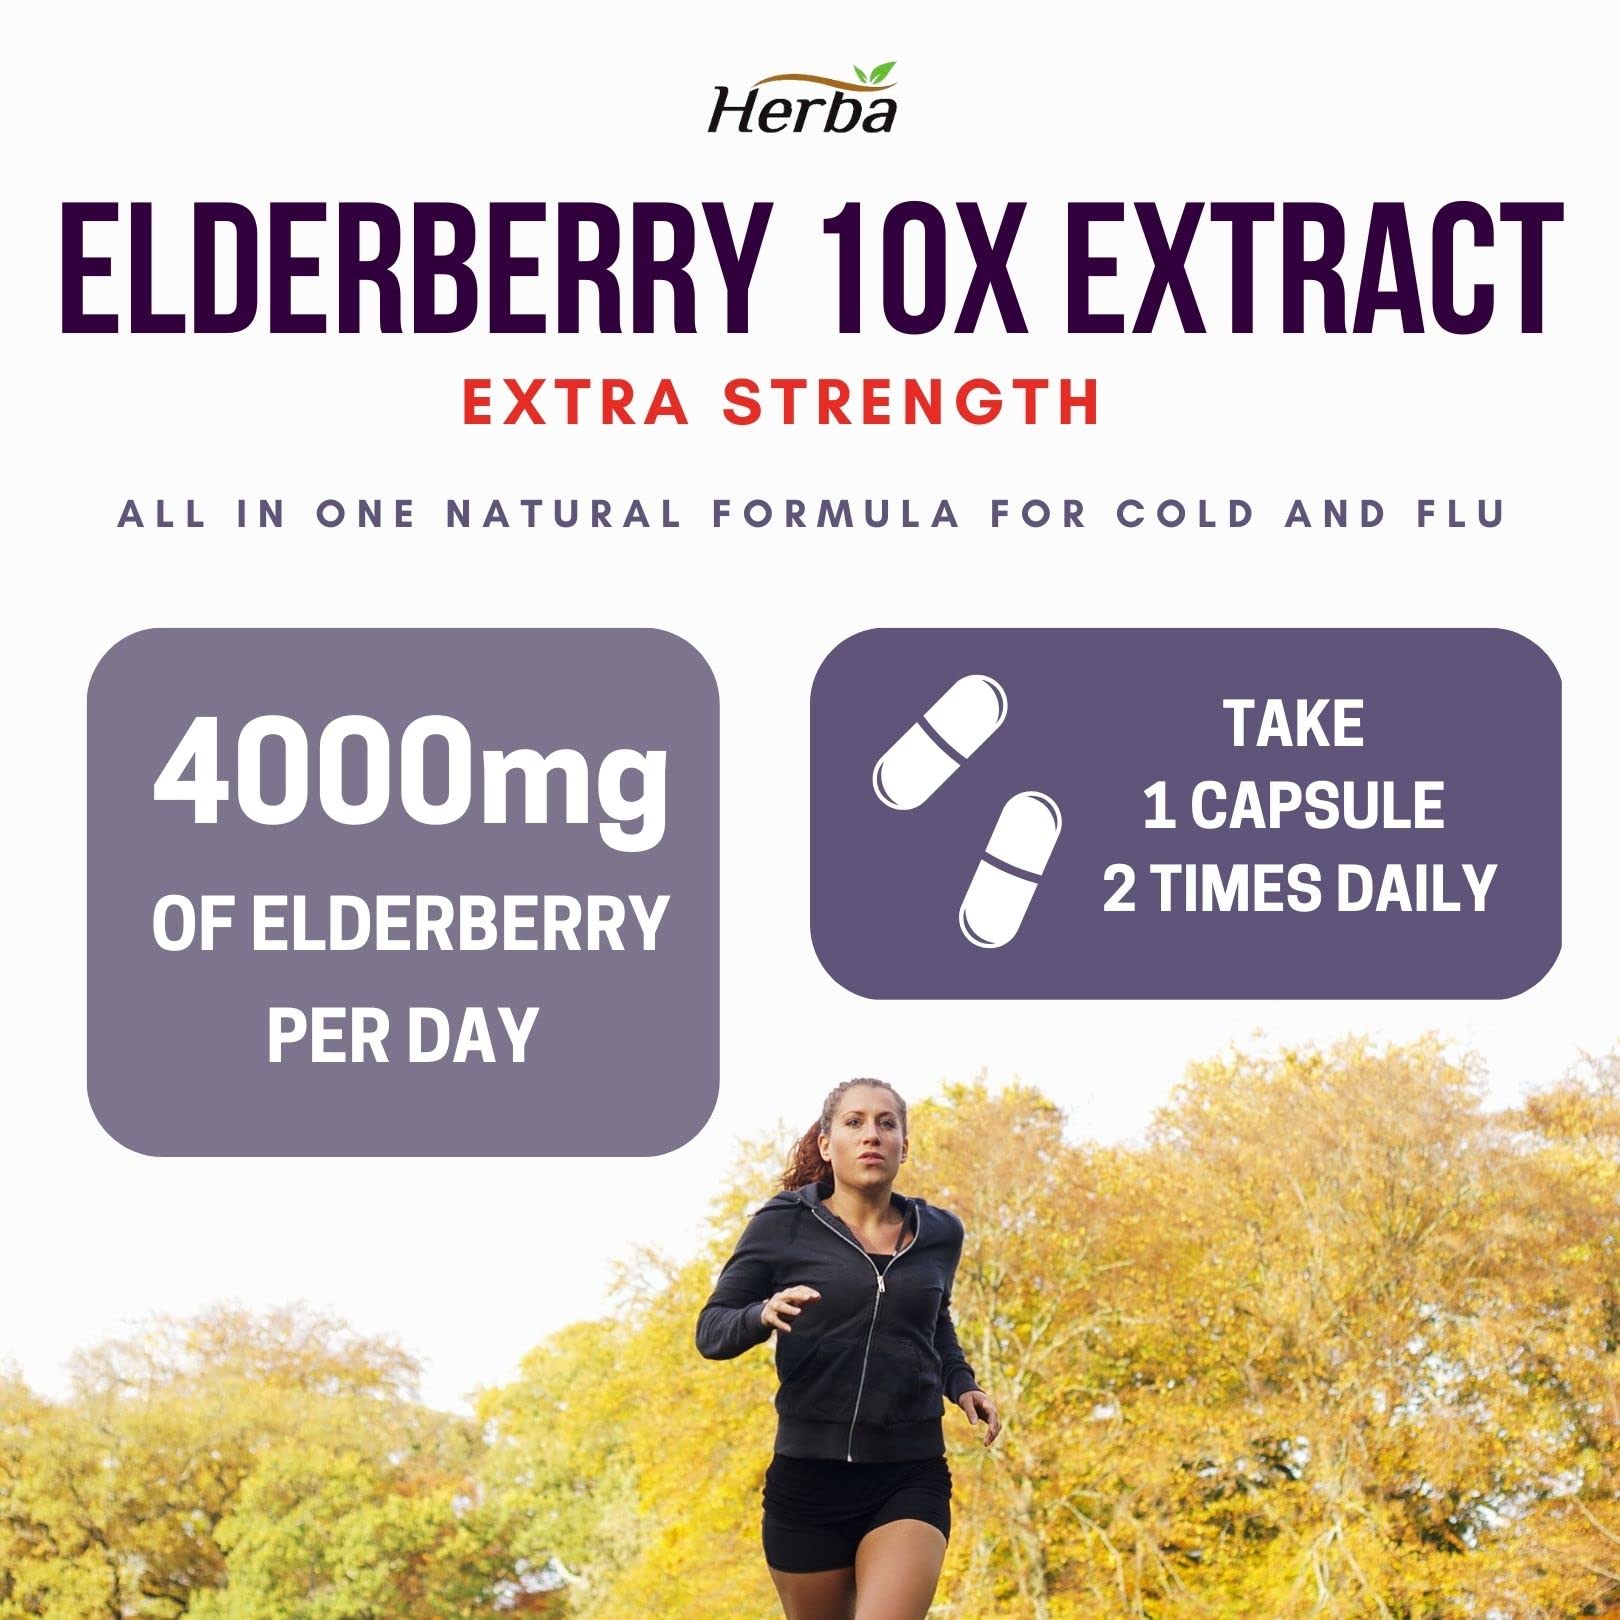 Herba Sambucus Black Elderberry Capsules – 2,000mg Equivalent | 10:1 Extract with Echinacea and Goldenseal Root, Vitamin C, and Zinc